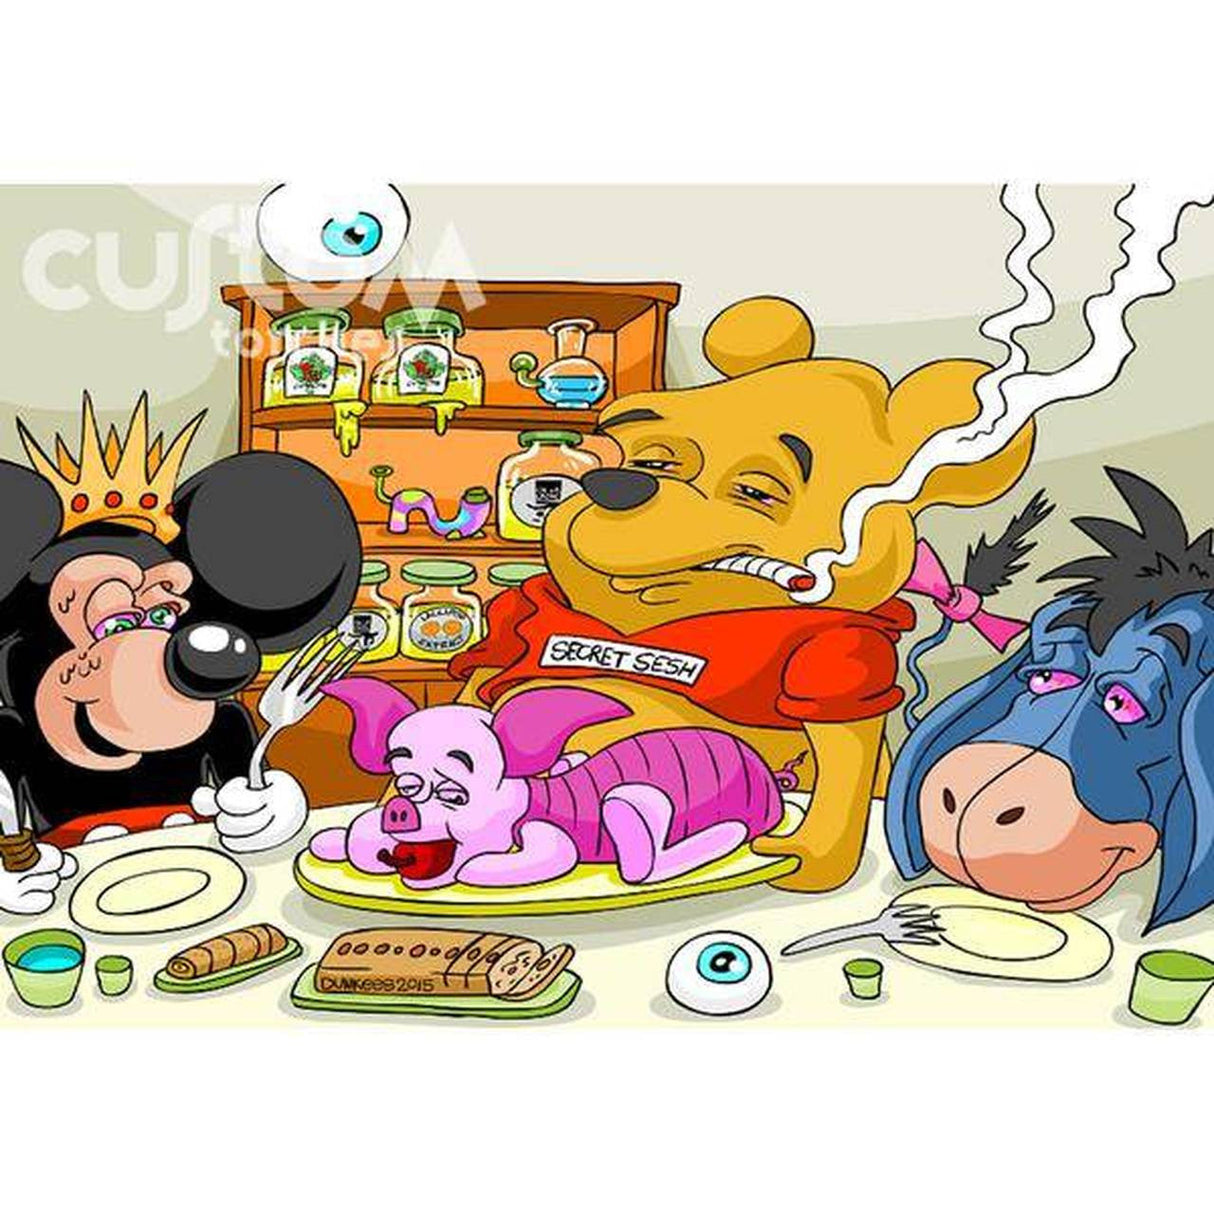 Dunkees Custom 6" Torch - Danksgiving Honey with cartoon characters enjoying a feast